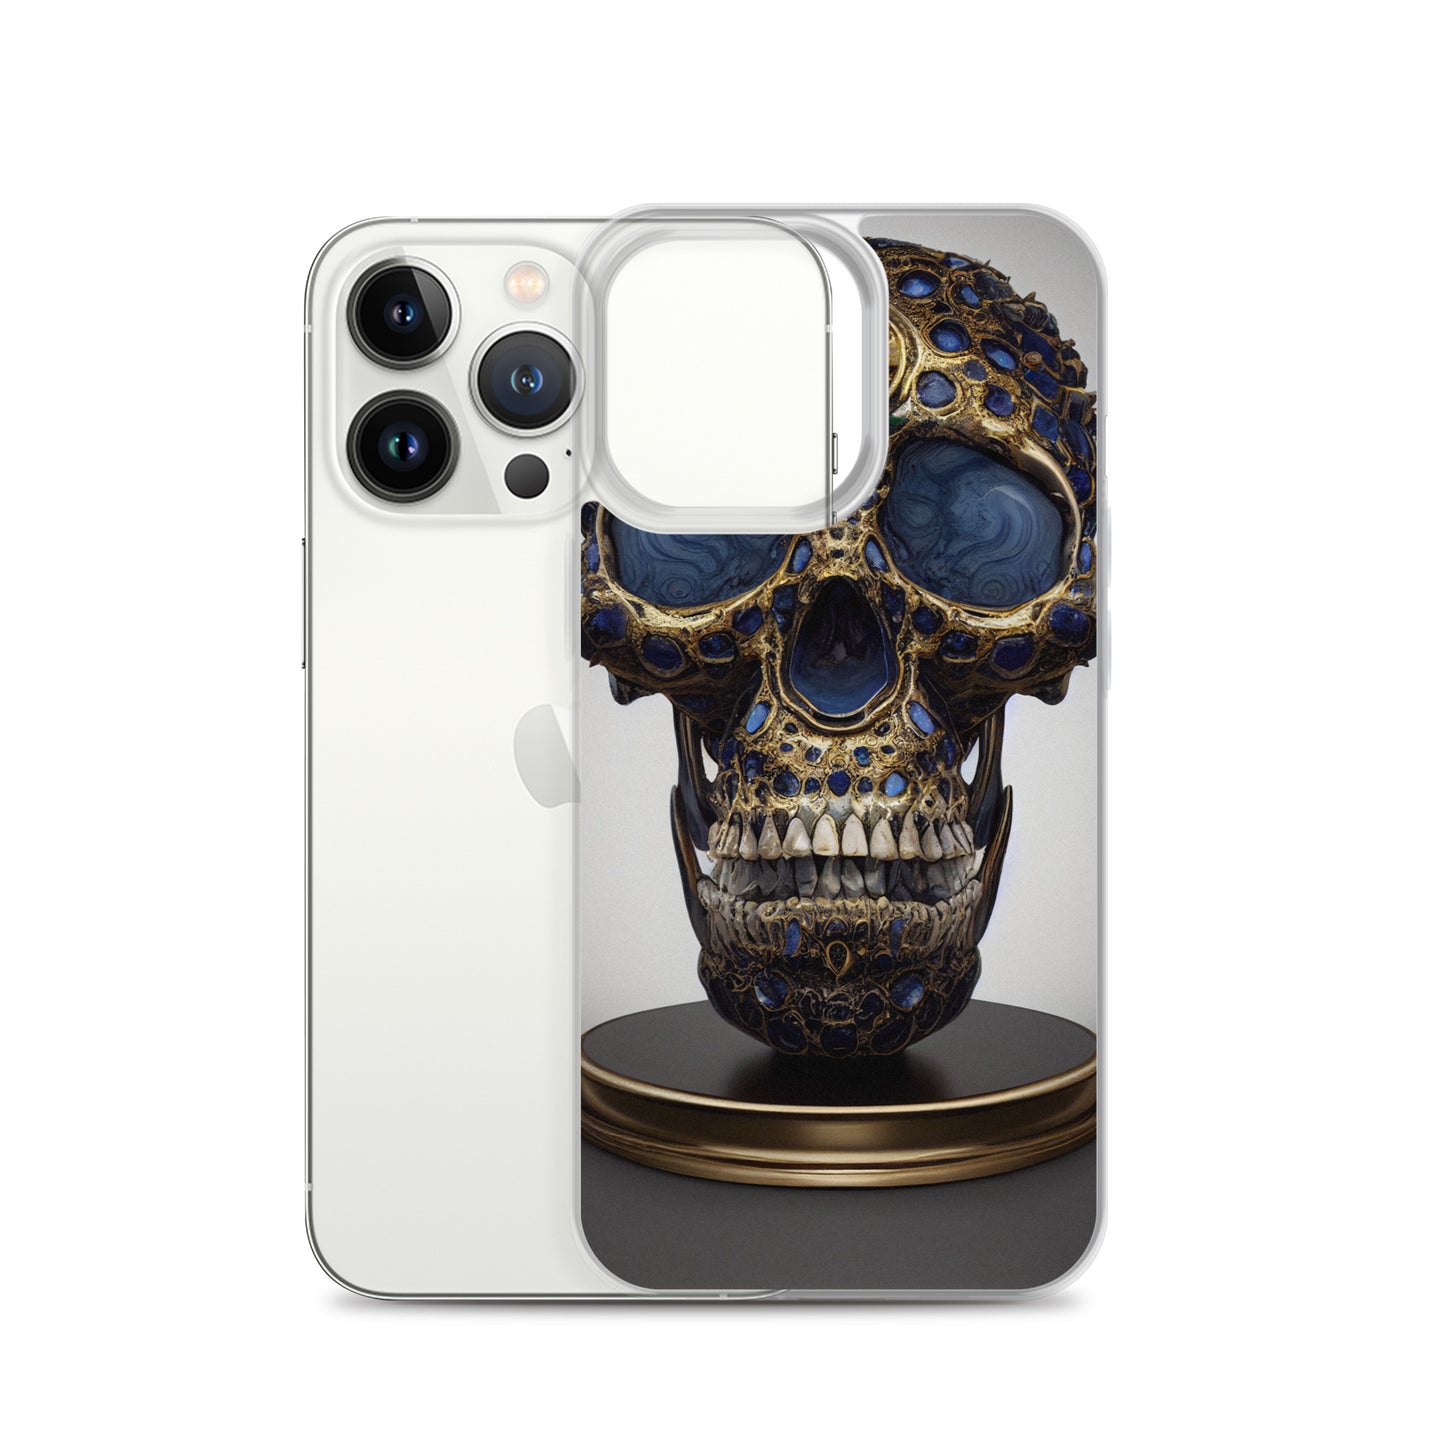 iPhone Case - Golden Skull